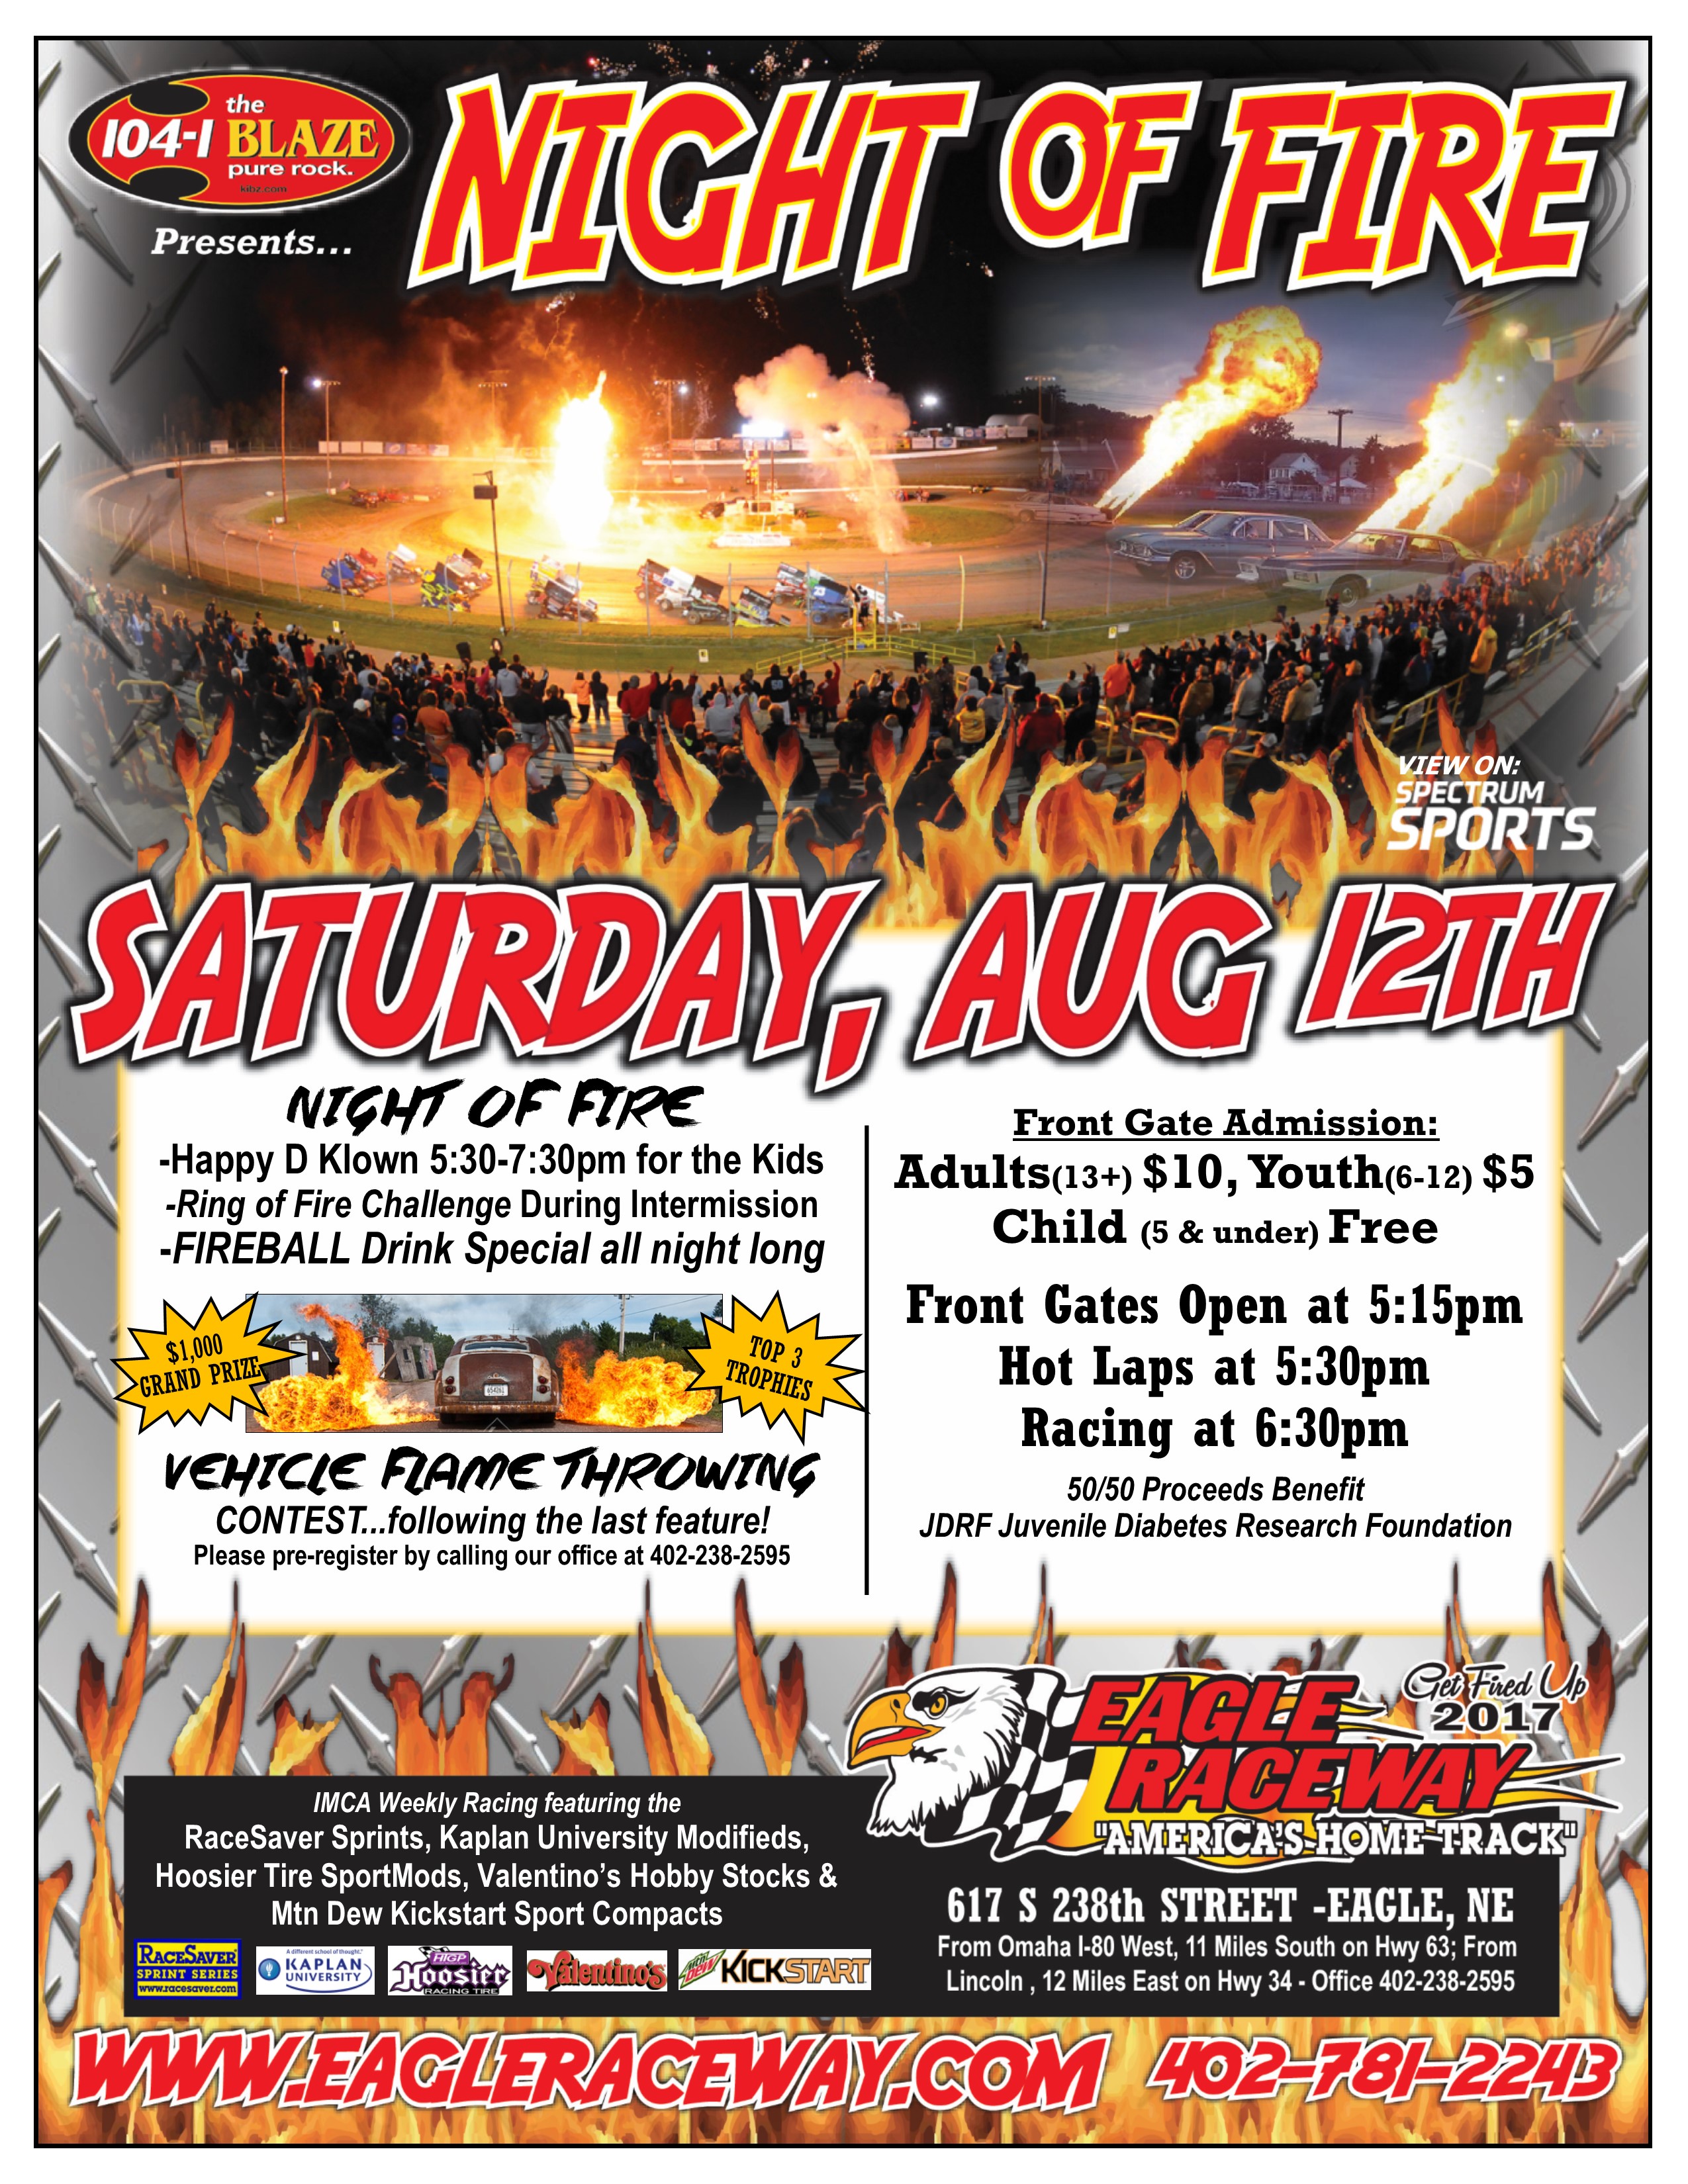 104.1 The Blaze presents Night of Fire! Sat, Aug 12th Eagle Raceway